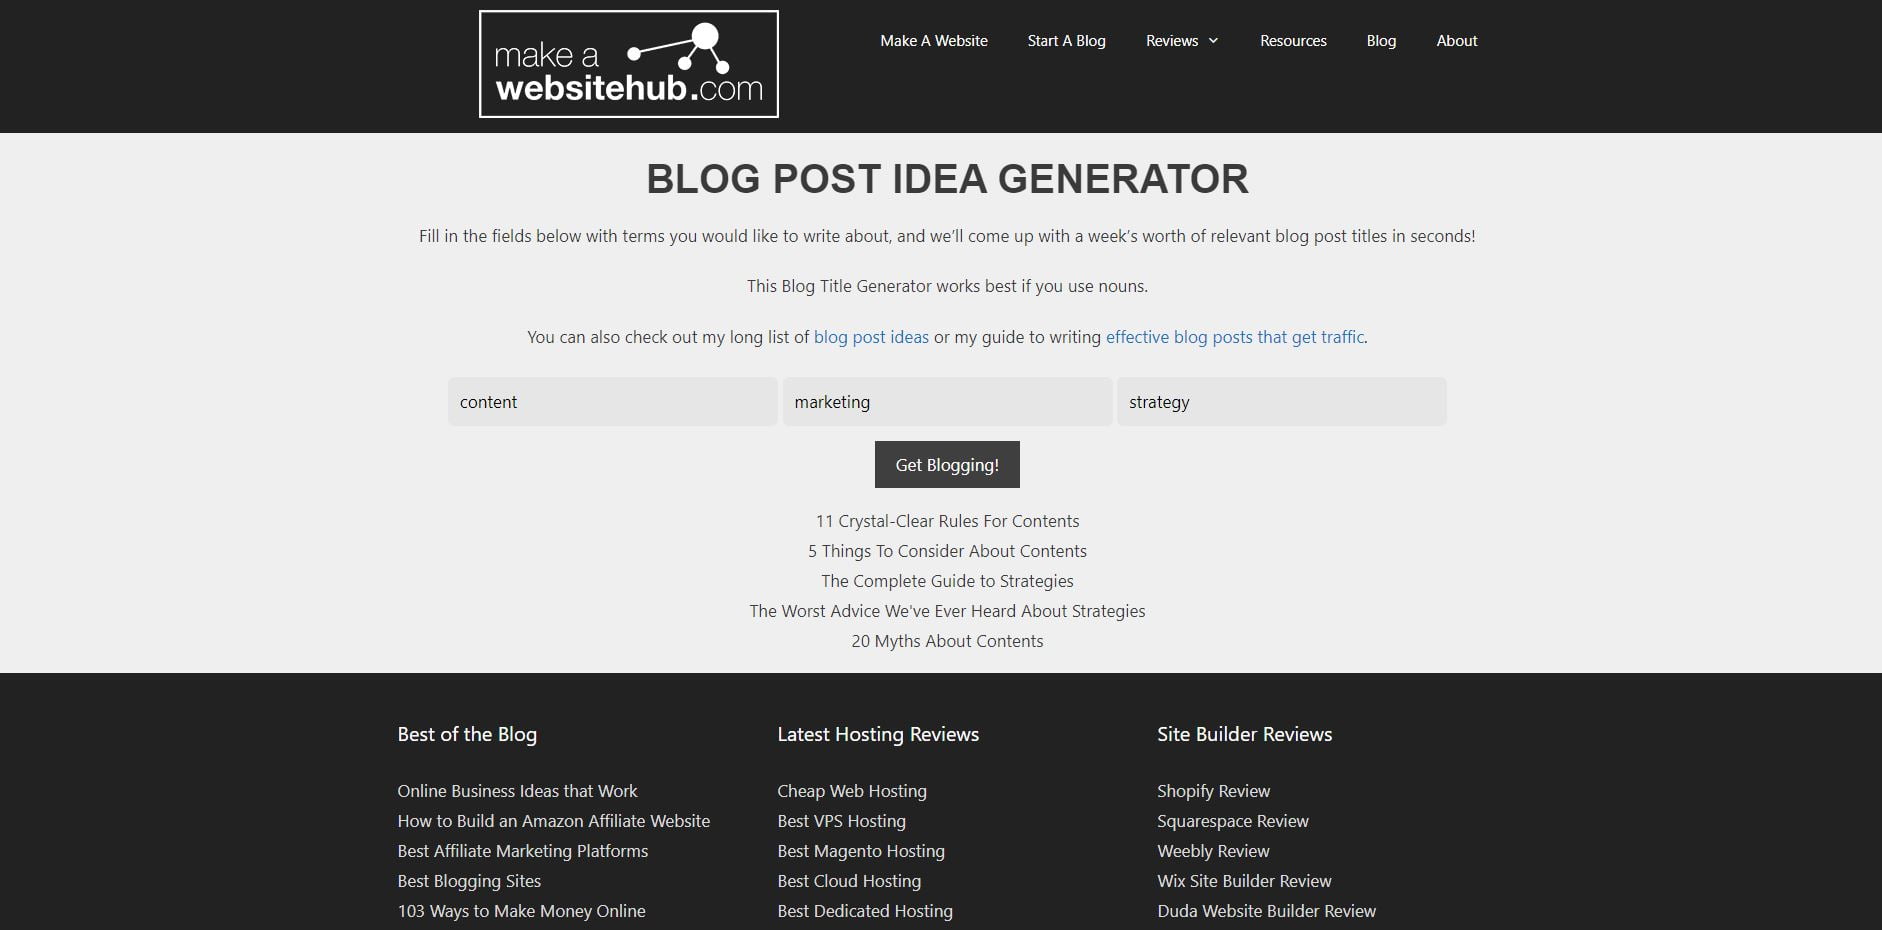 Make a Website Hub blog generator results